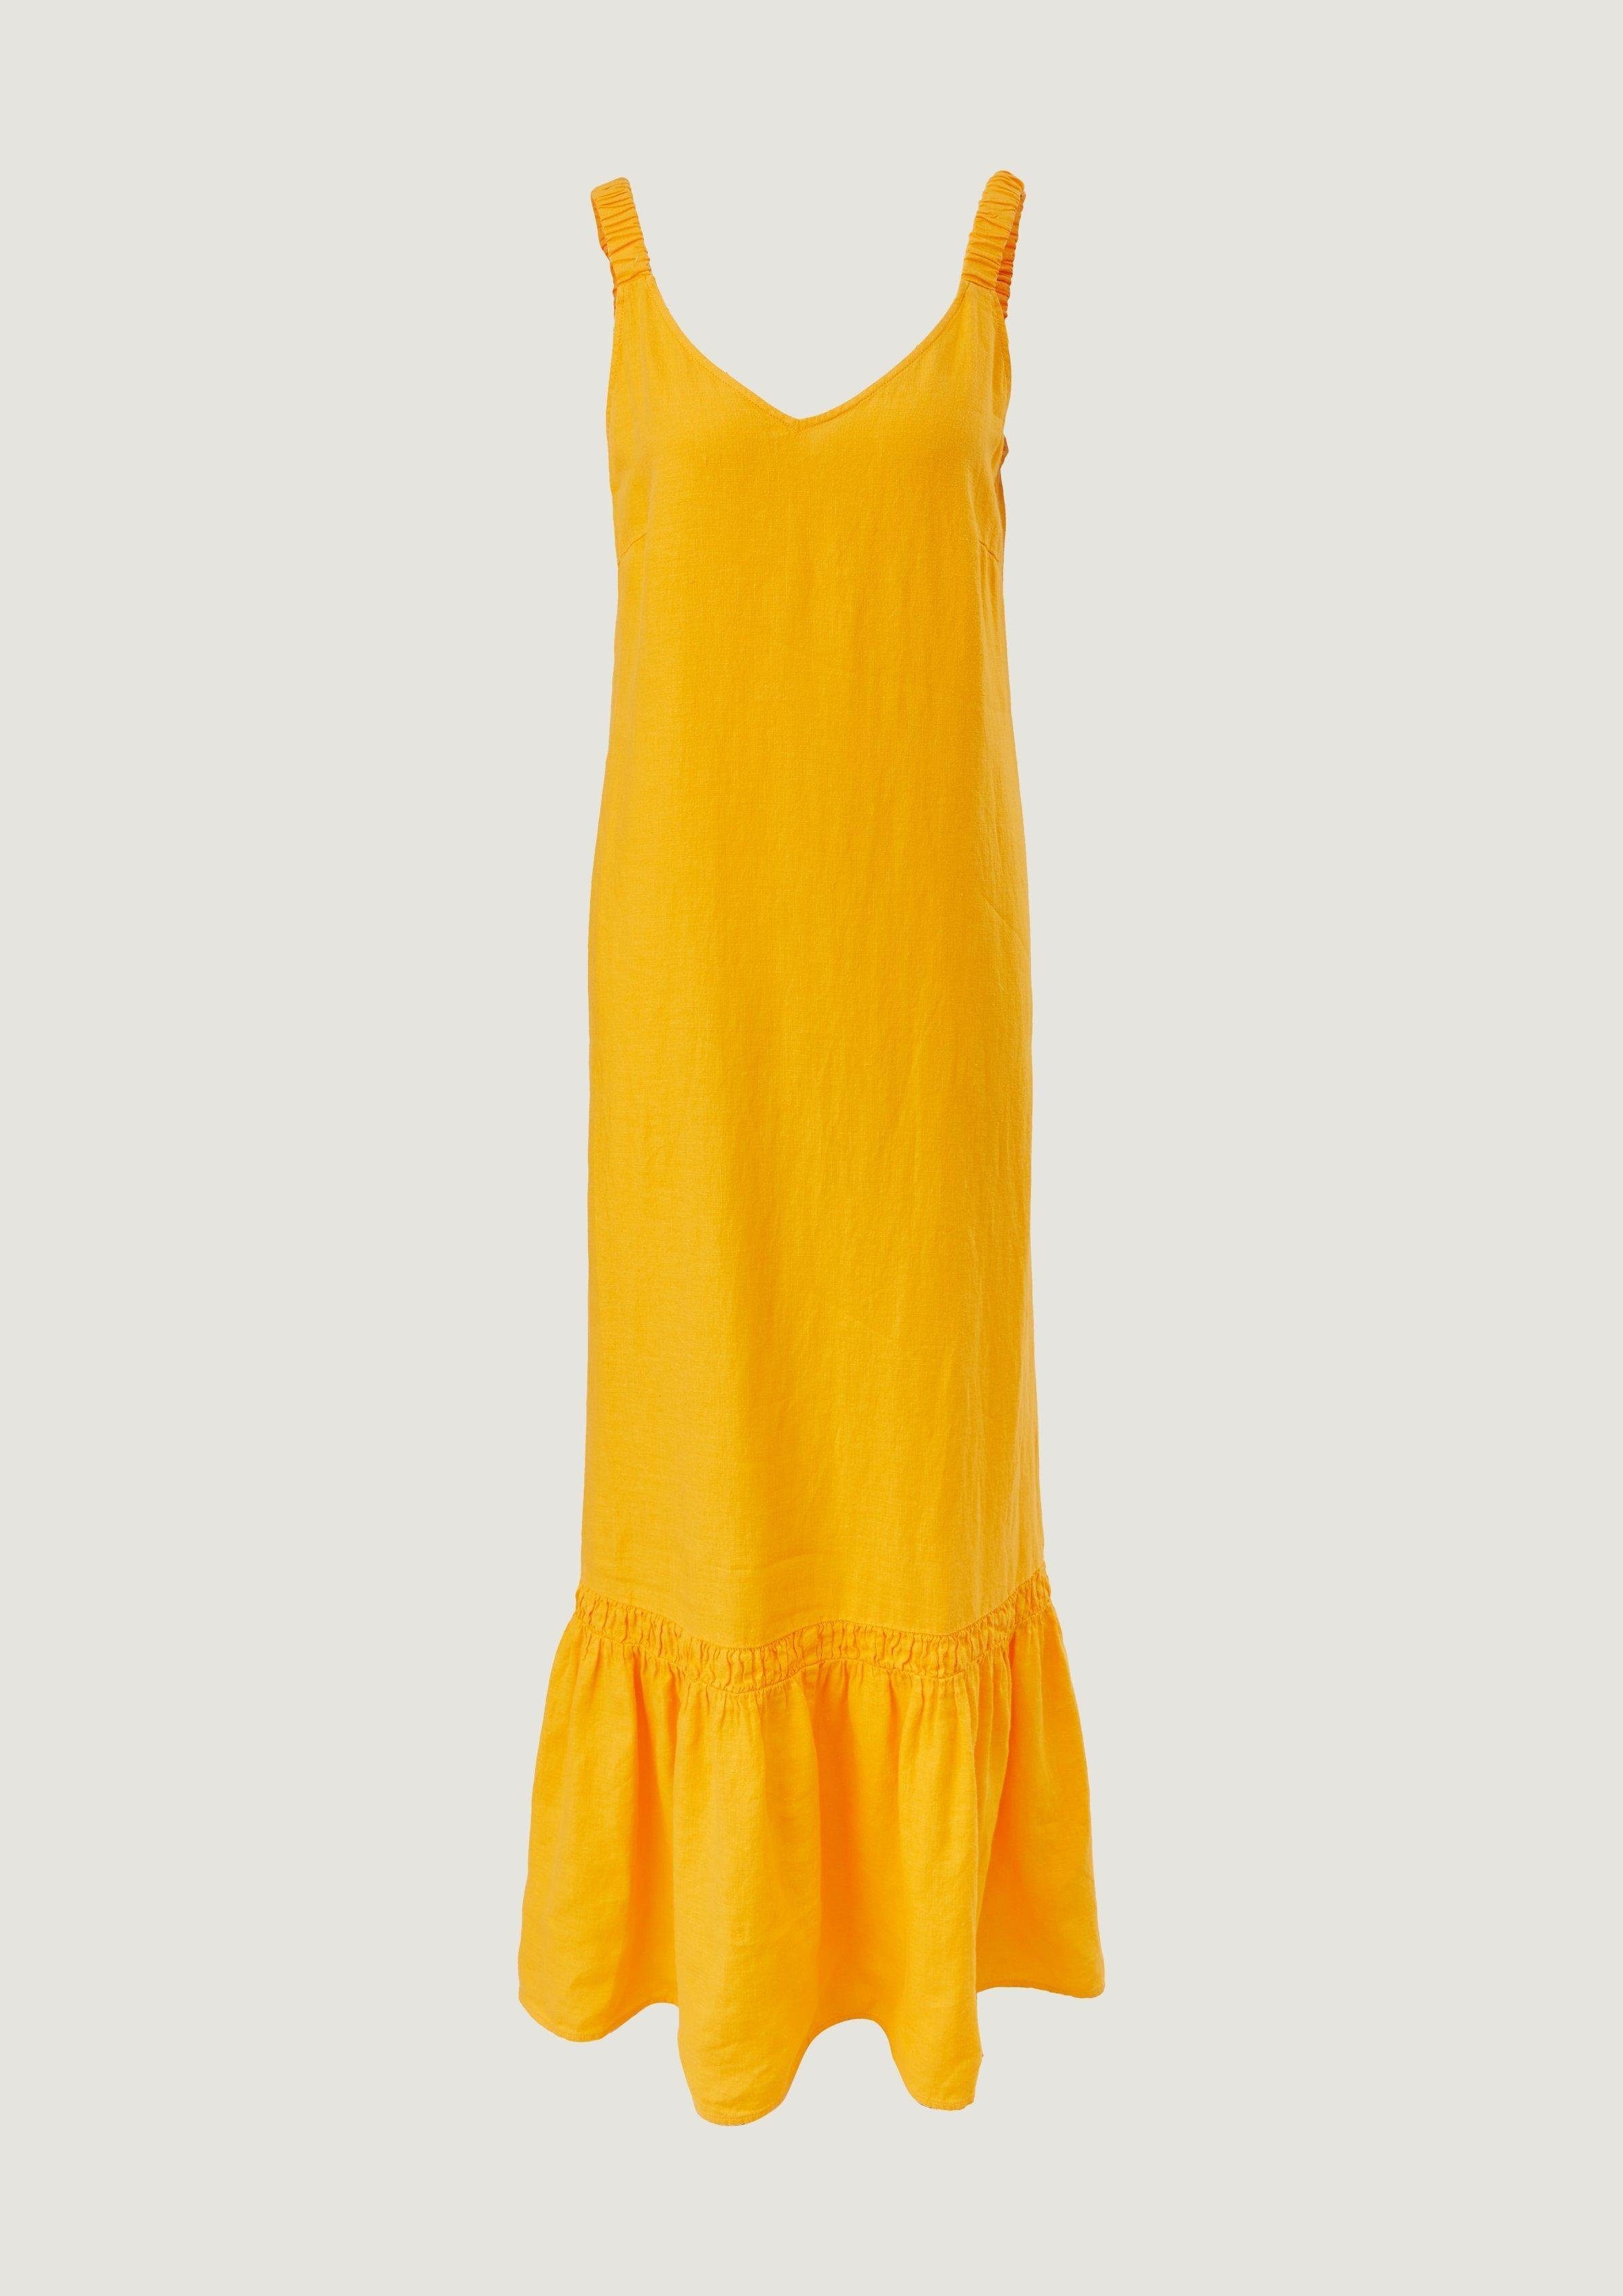 mango Stufen Maxikleid casual Leinen Maxi-Kleid bright comma aus identity